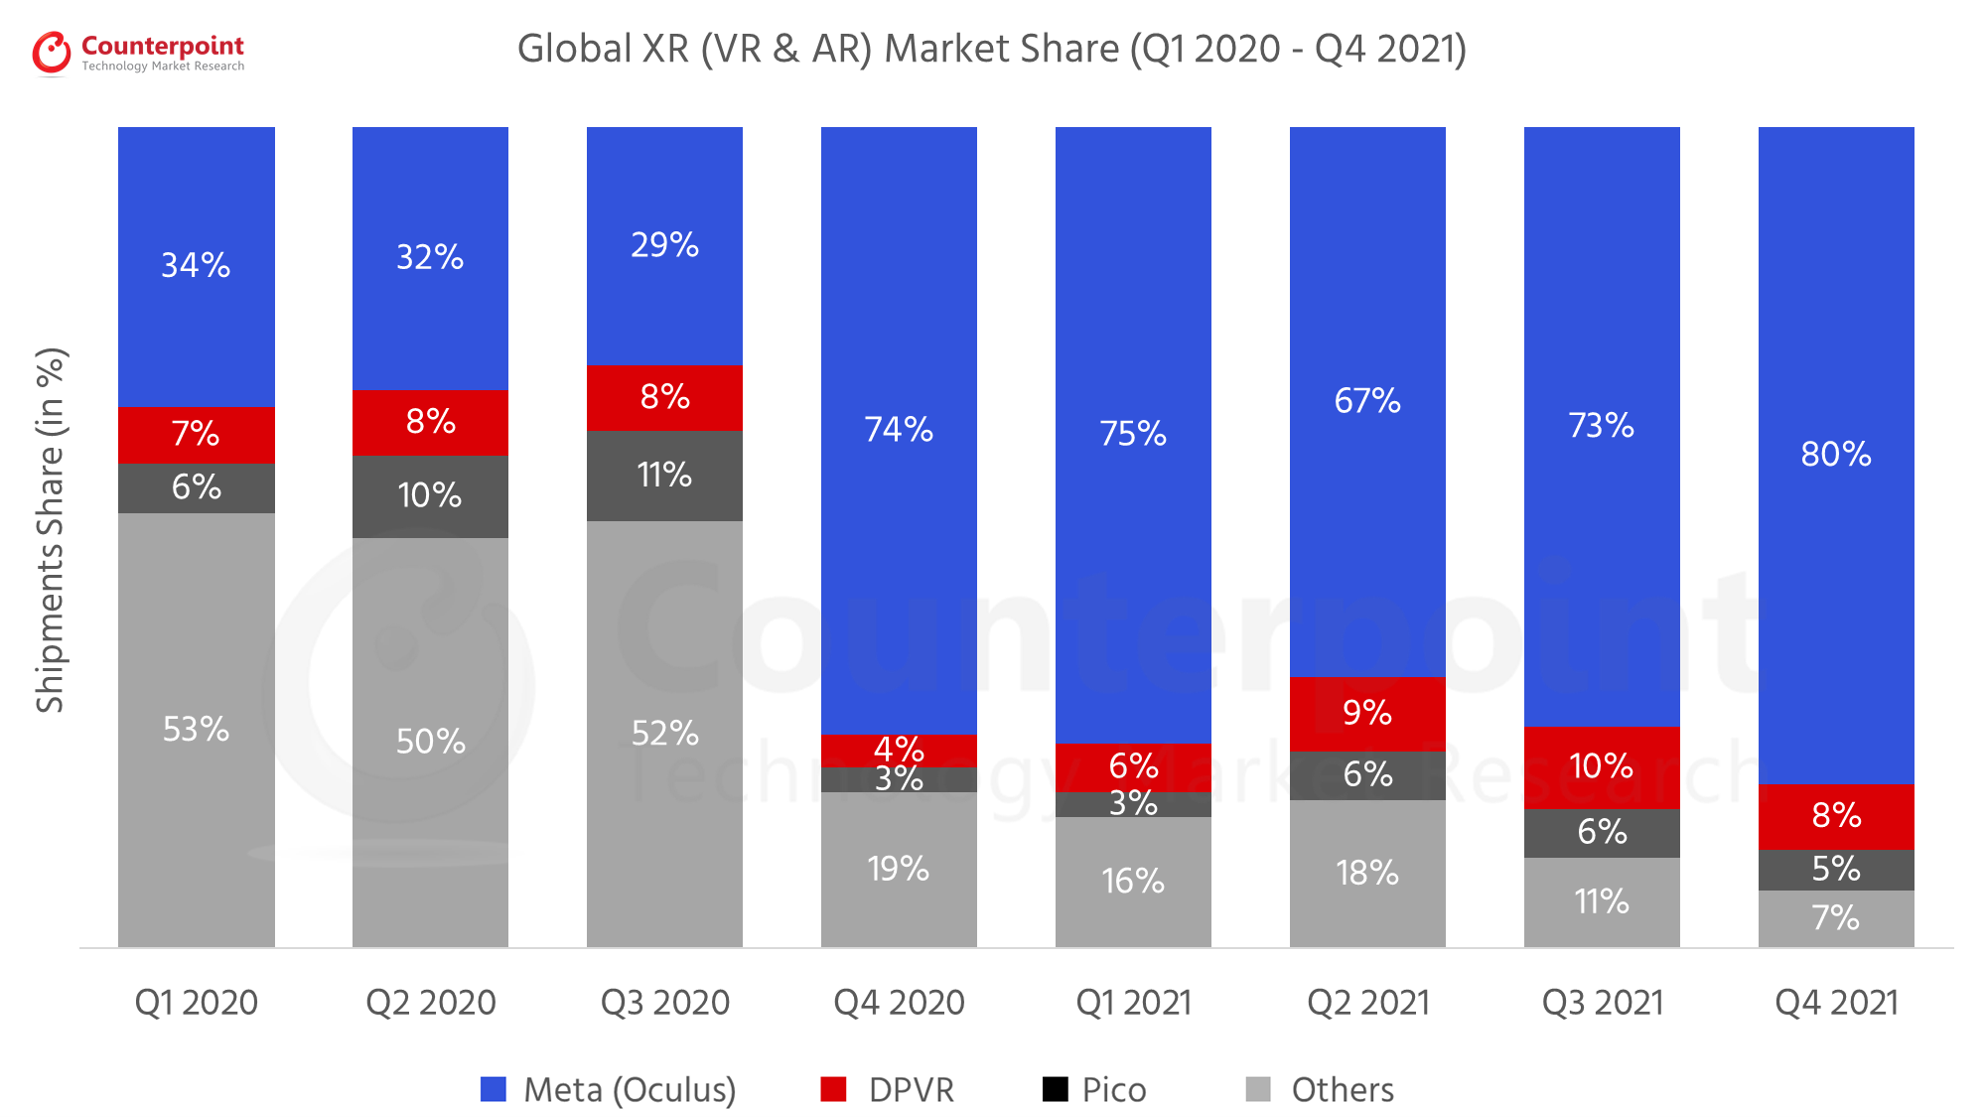 Global XR (AR & VR Headsets) Market Share By Quarter